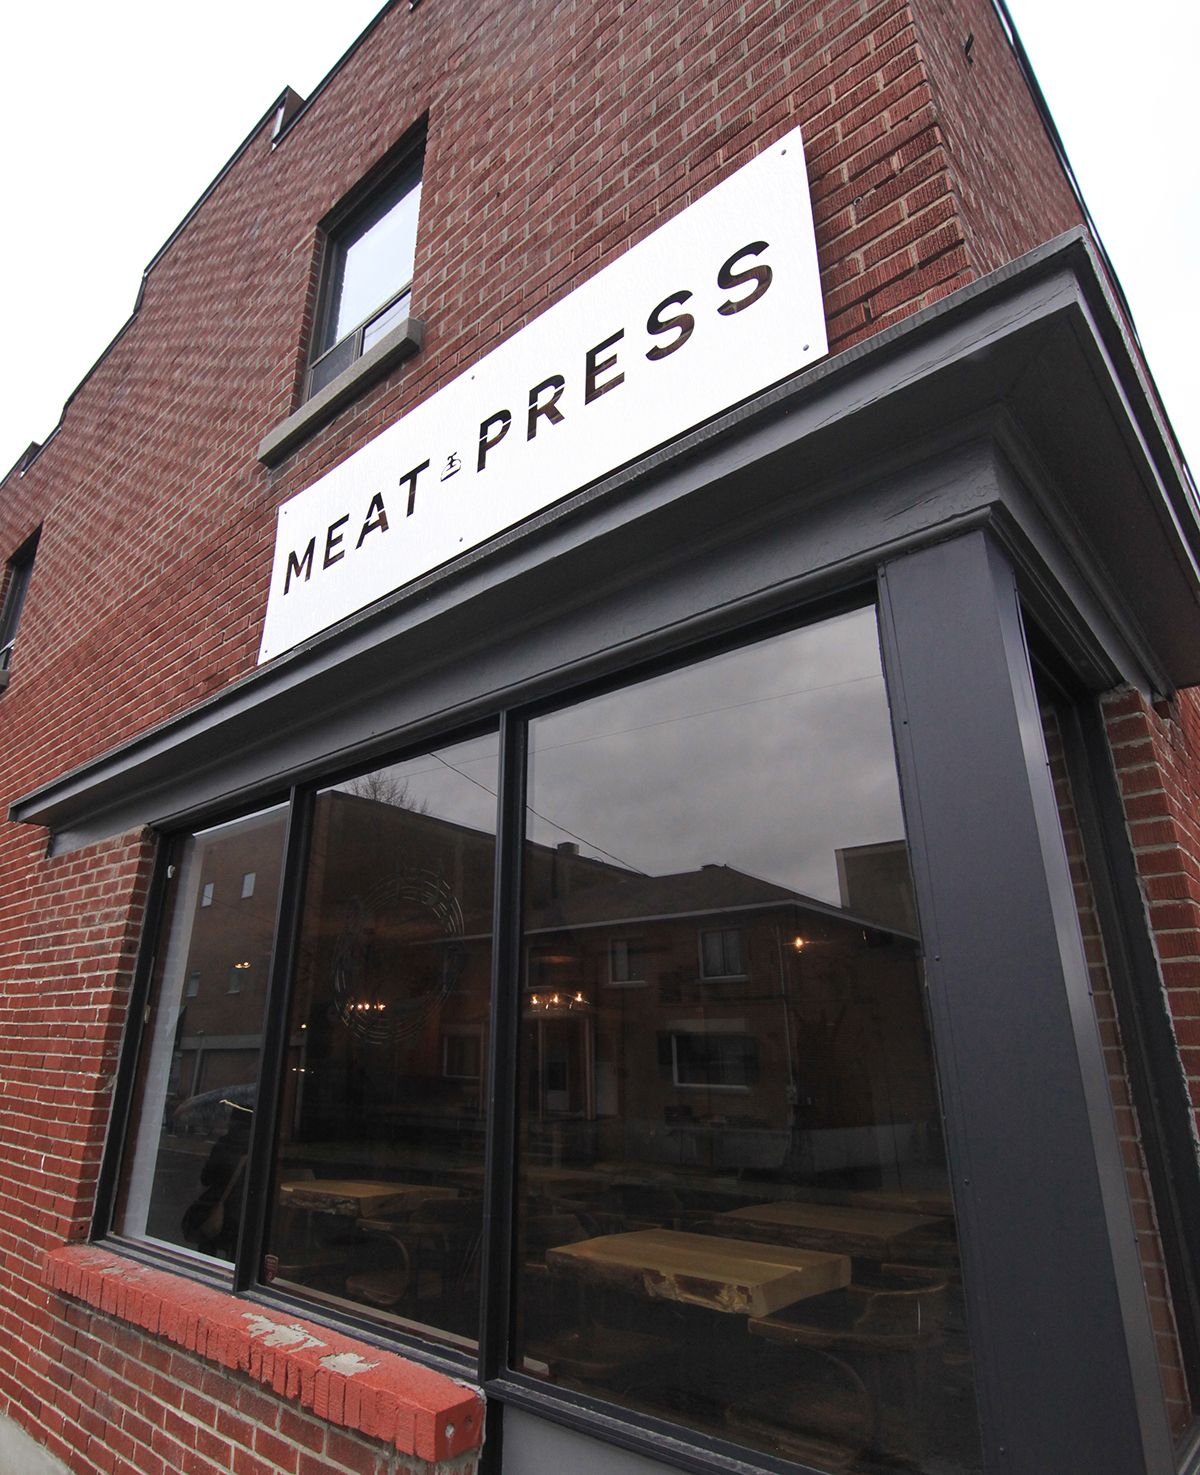 Meat Press